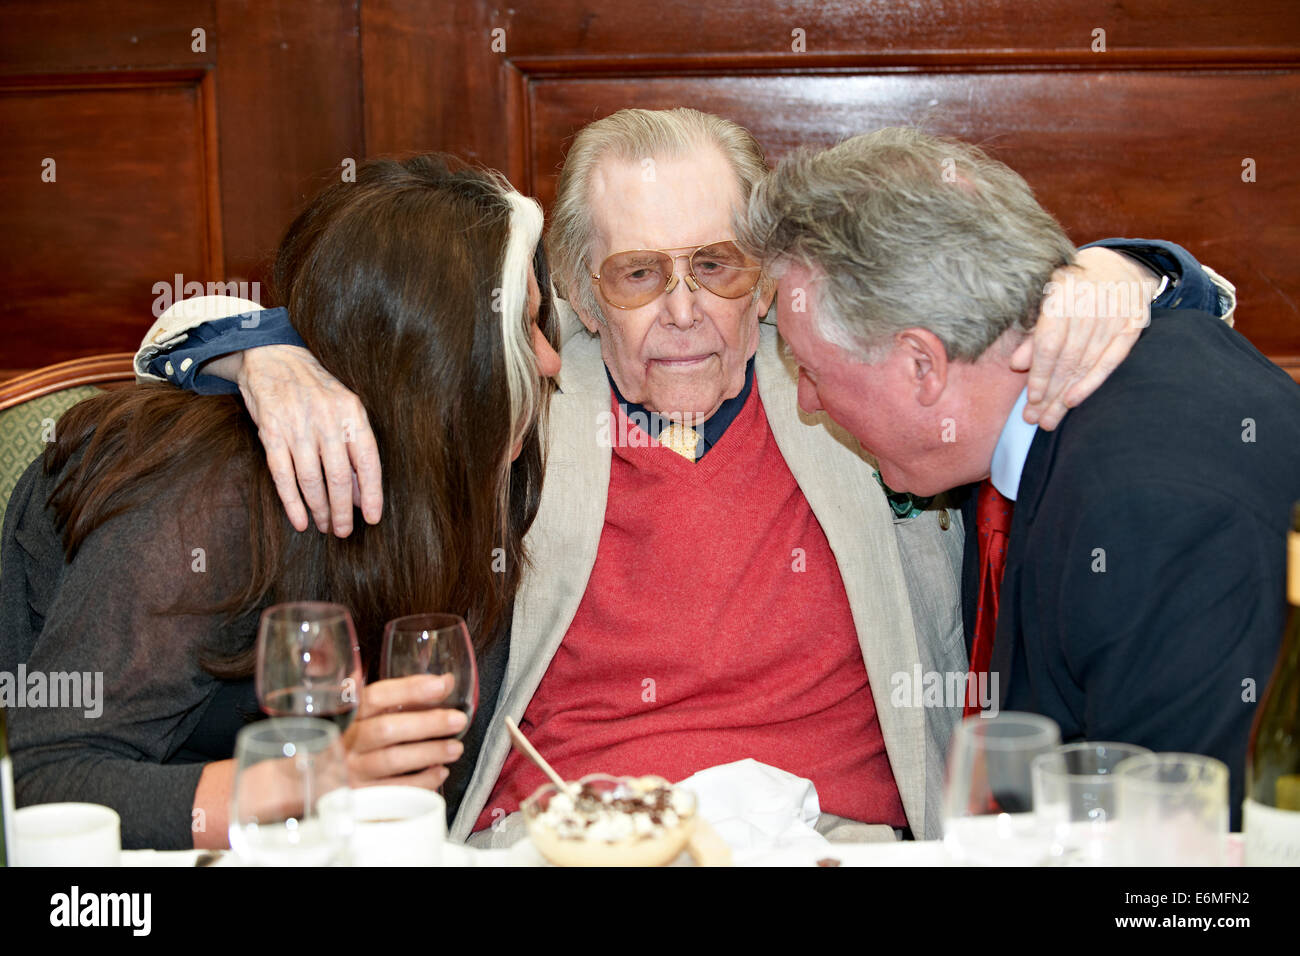 Peter O'Toole at the 70th birthday of Richard Ingrams, with SARA SOUDAIN and John McEntee, 21/08/2012 Stock Photo